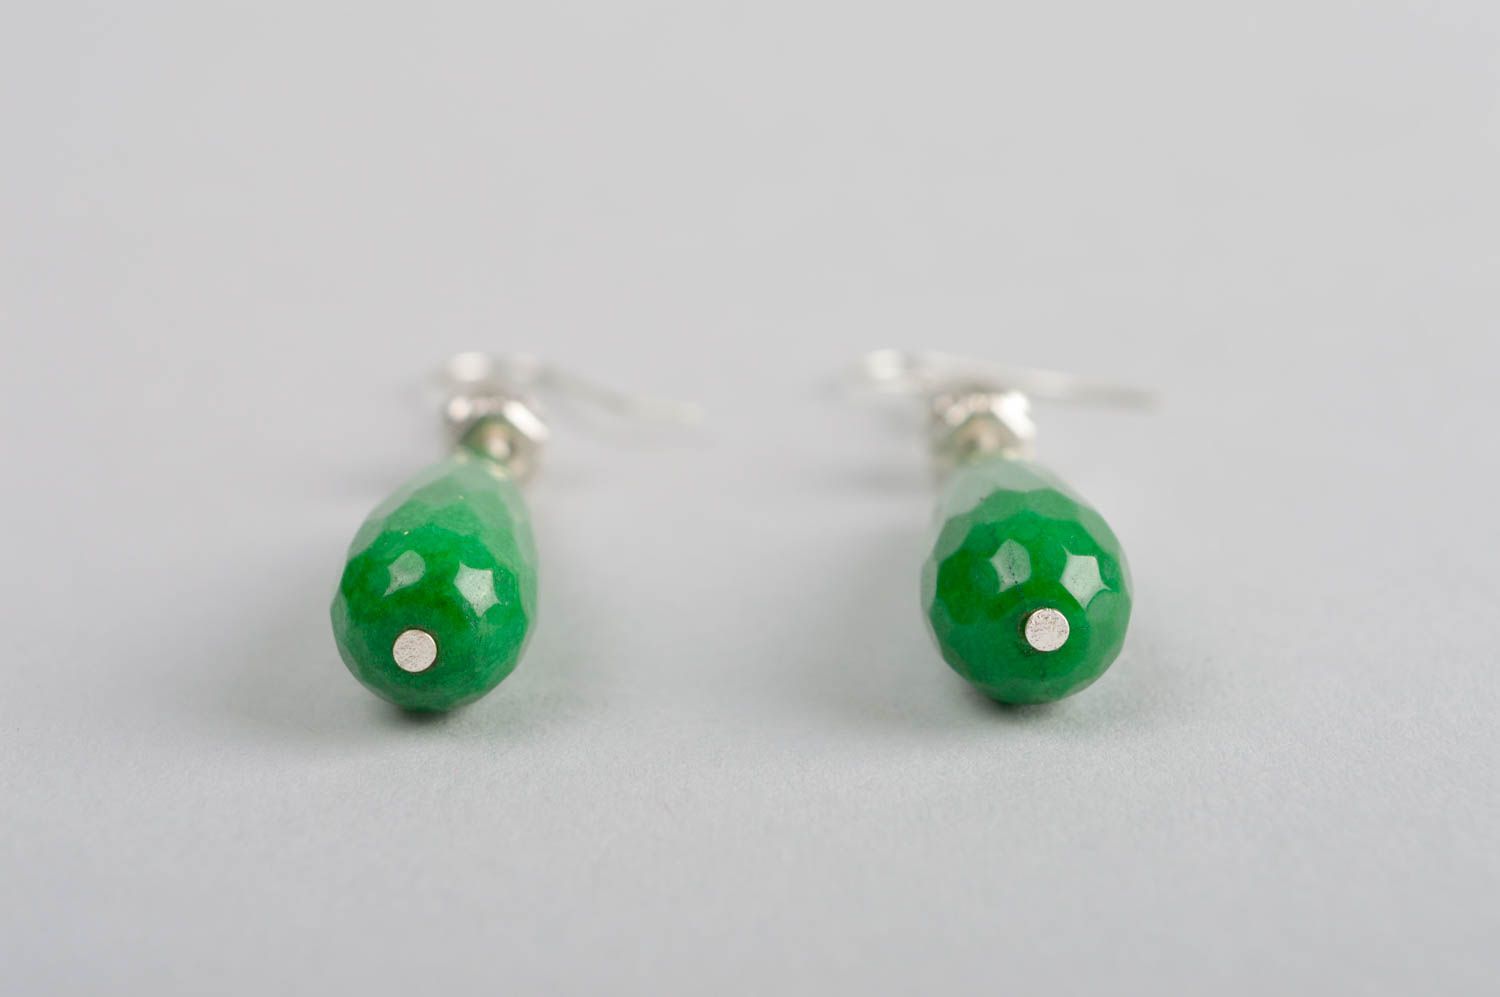 Handmade gemstone earrings bead earrings artisan jewelry designs gifts for her photo 4